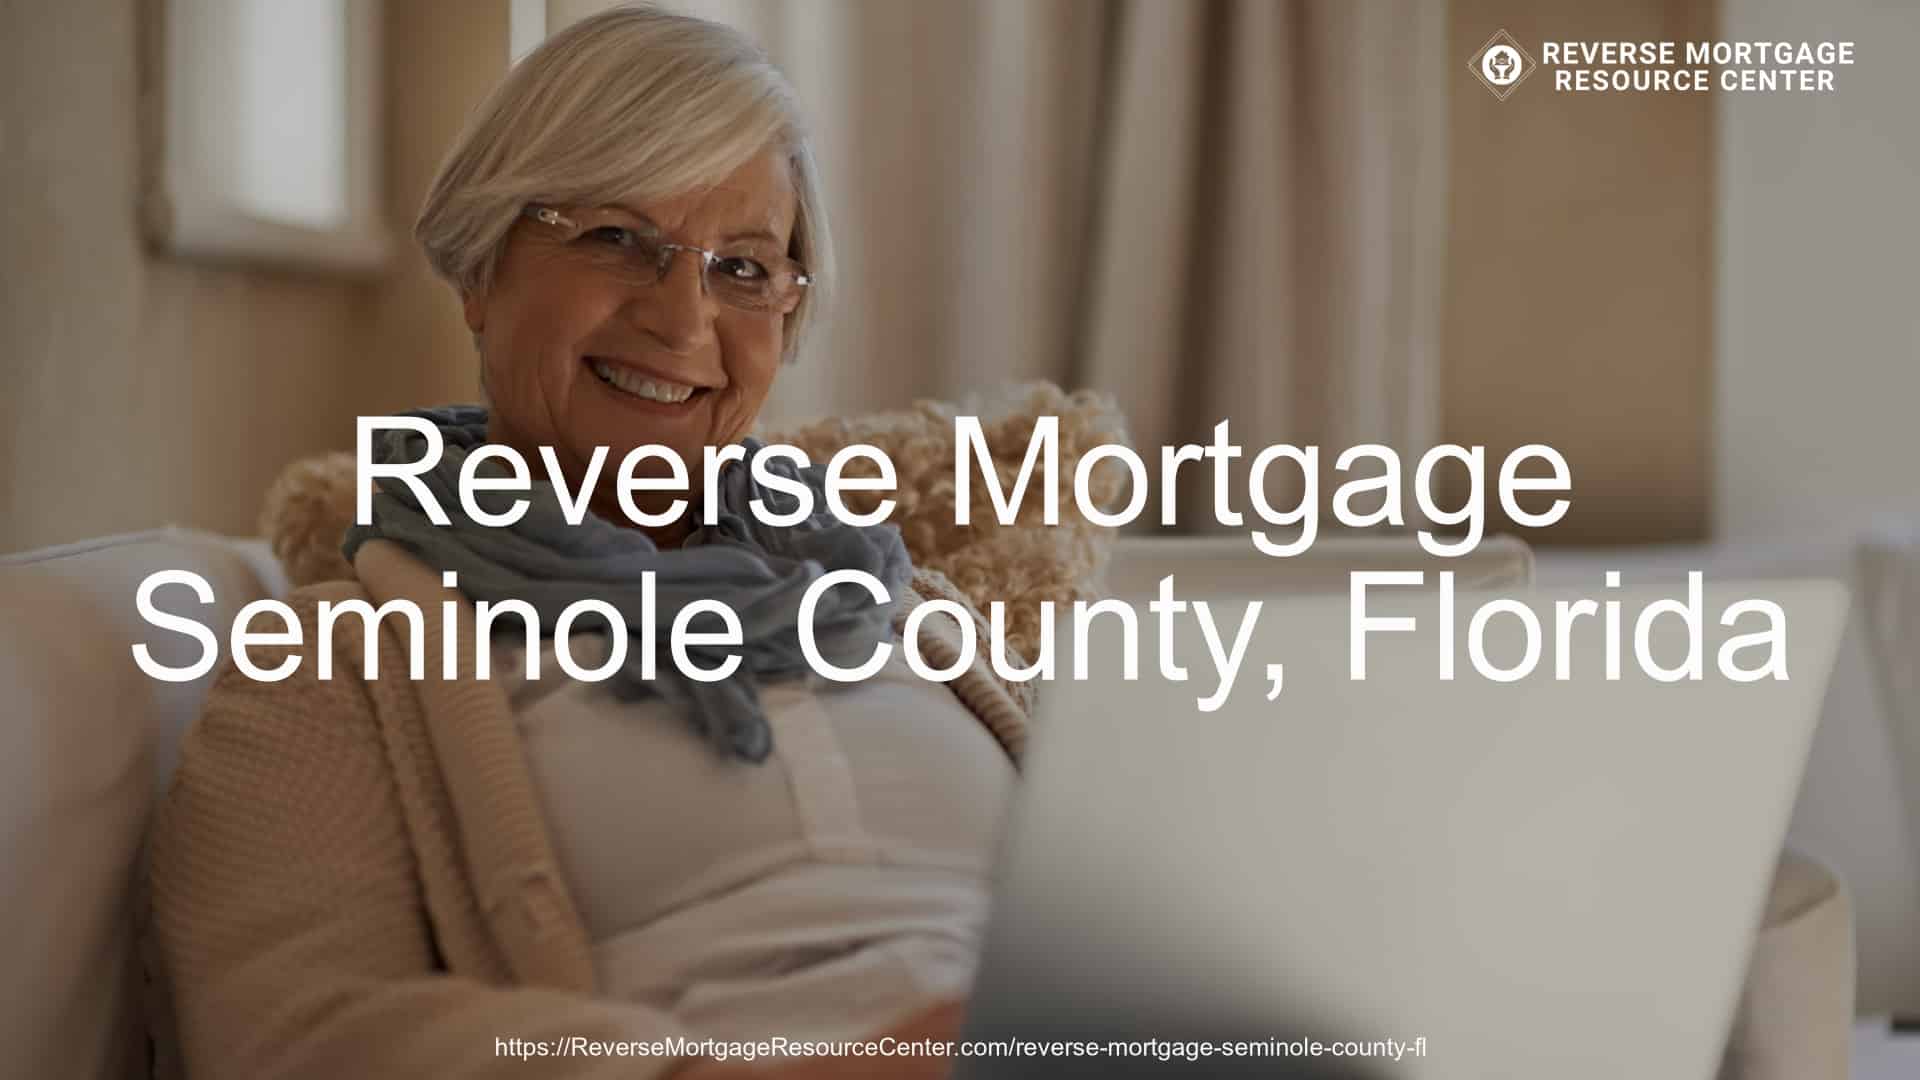 Reverse Mortgage Loans in Seminole County Florida